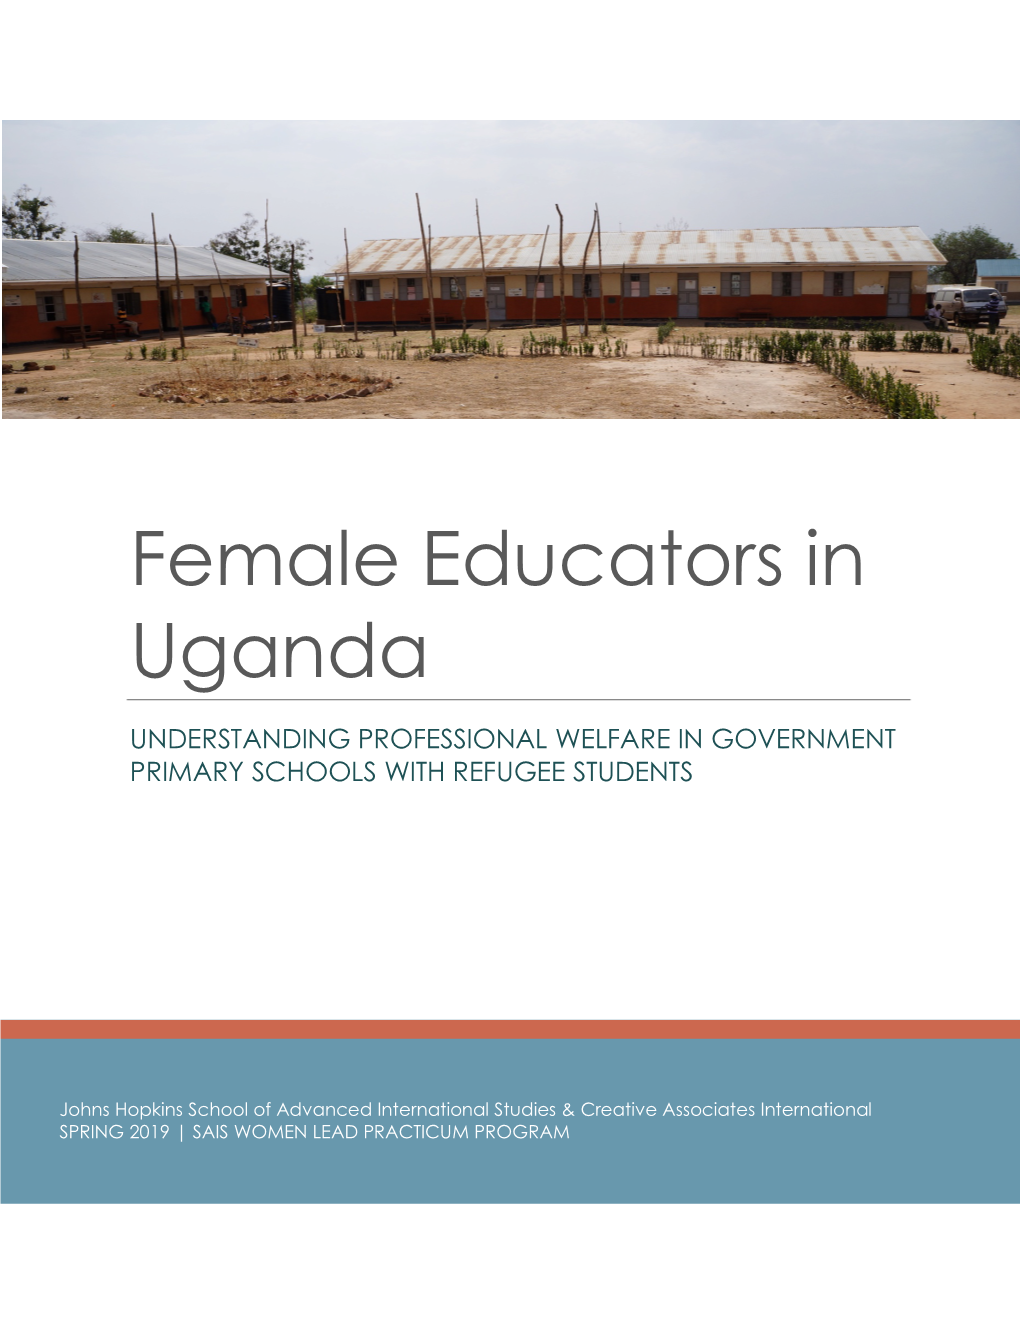 Female Educators in Uganda